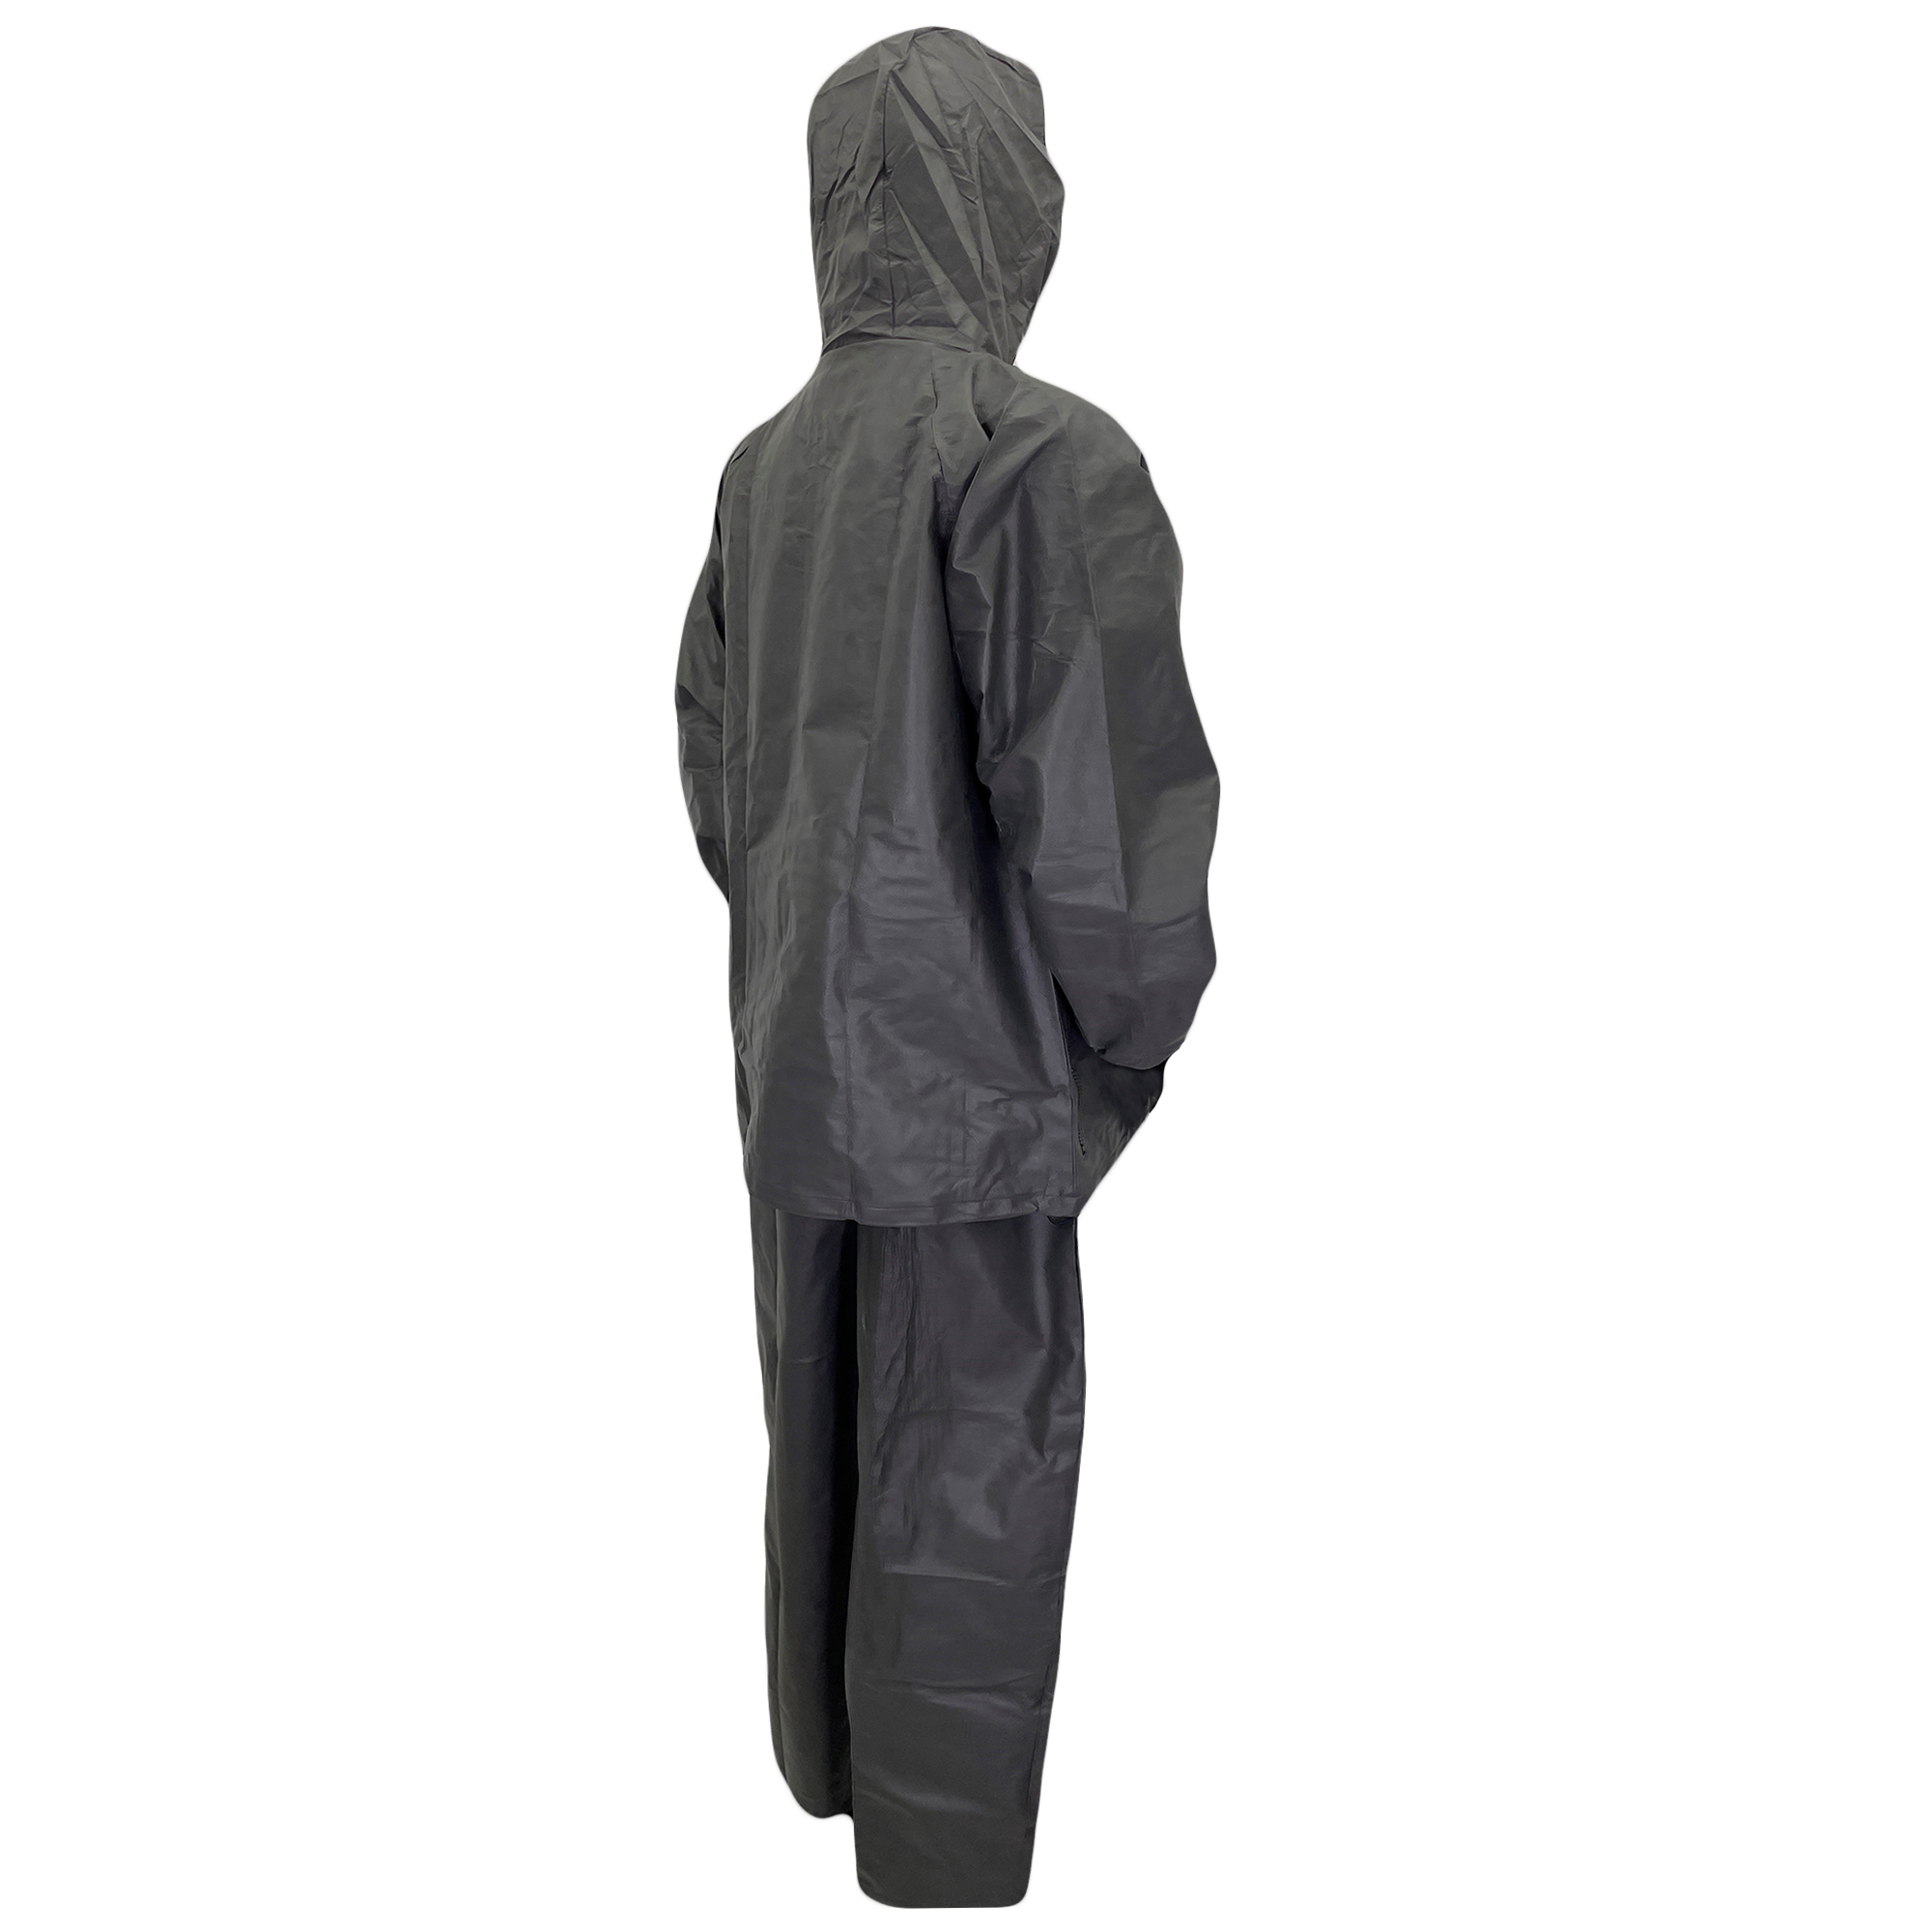 Frogg Toggs Men's Pro Lite Rain Suit with Pockets - Walmart.com